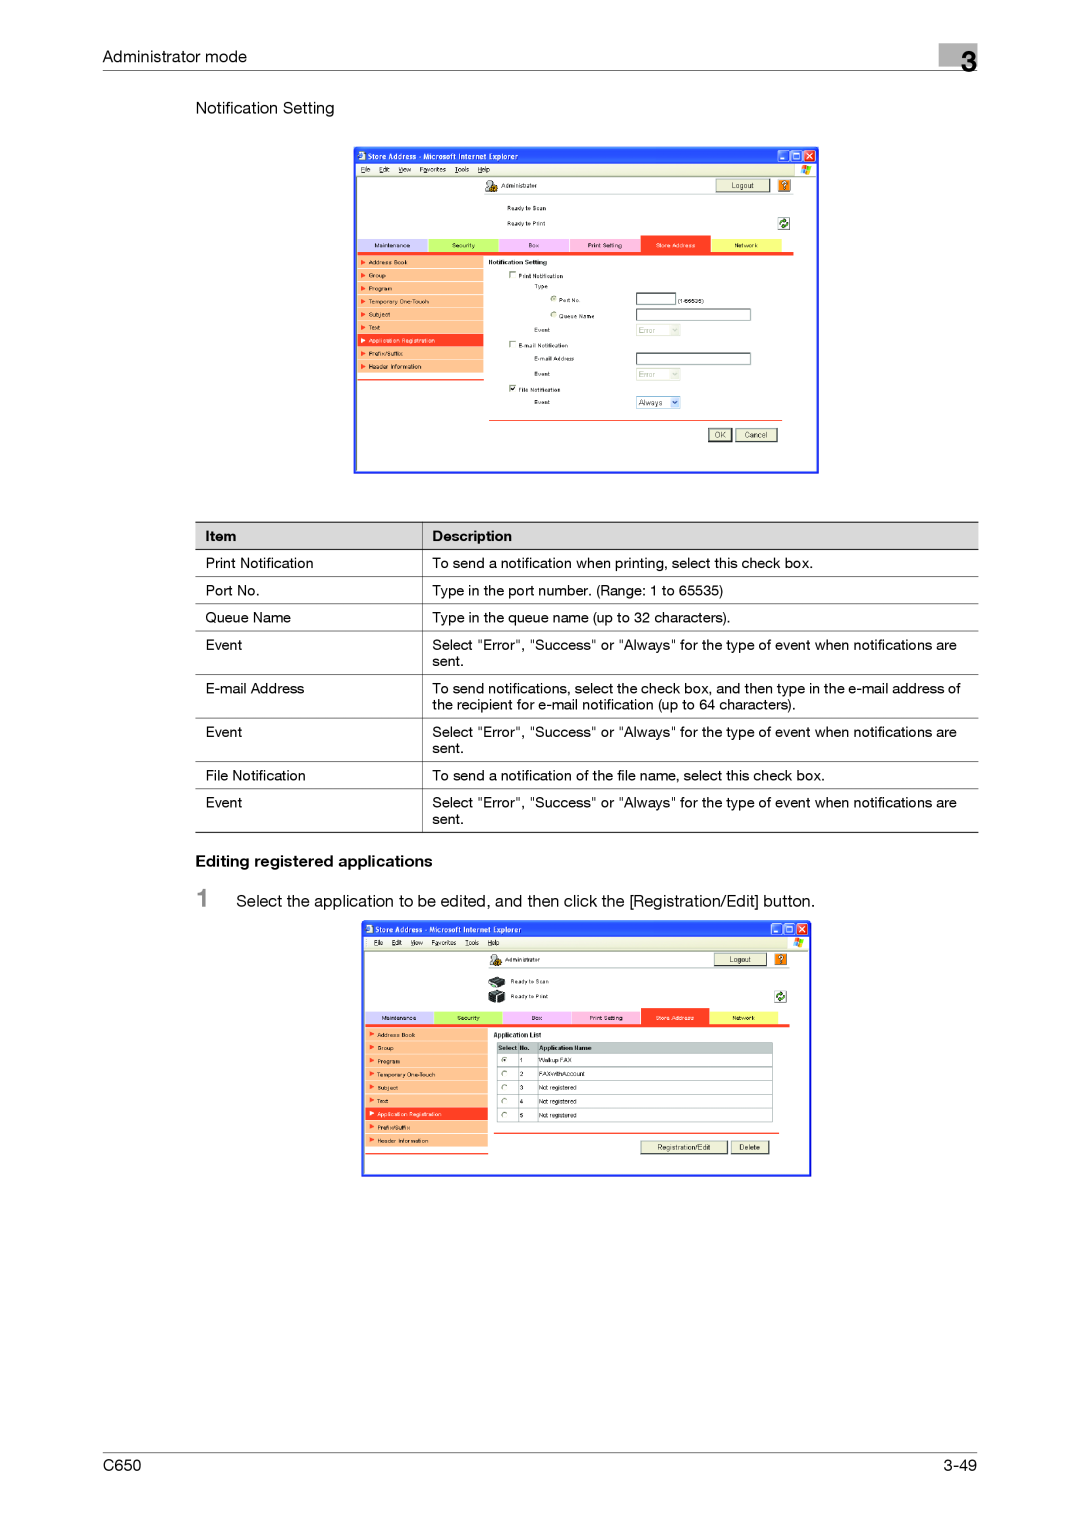 Konica Minolta C650 manual Administrator mode Notification Setting, Editing registered applications, 3-49 